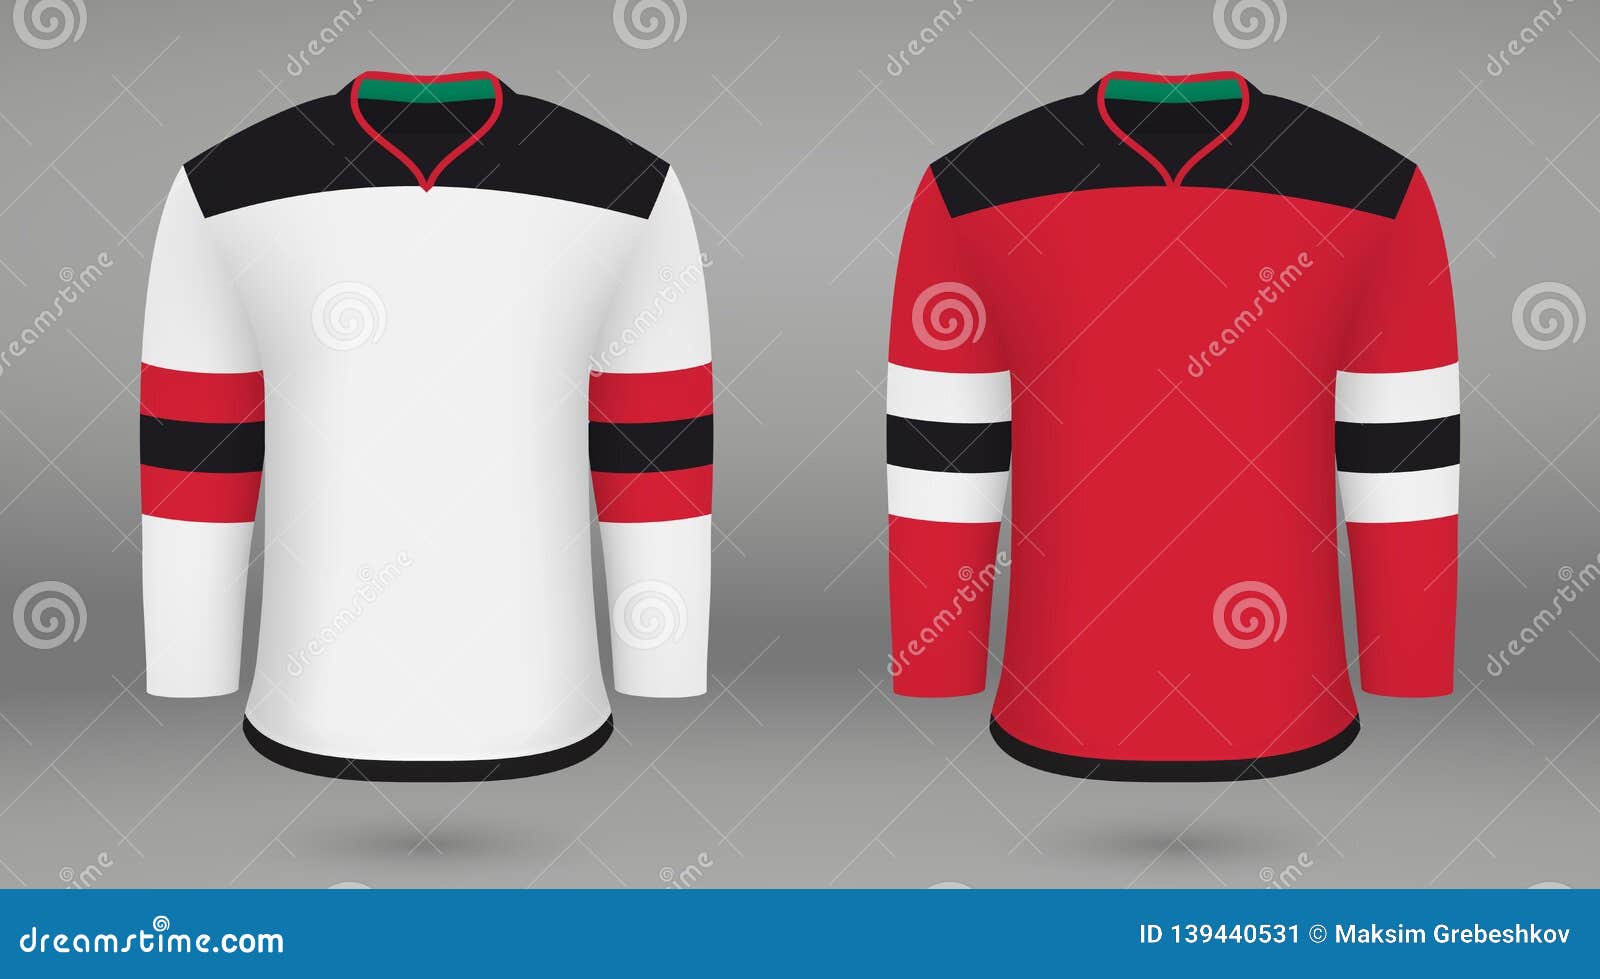 New jersey devils ice hockey team uniform colors Vector Image